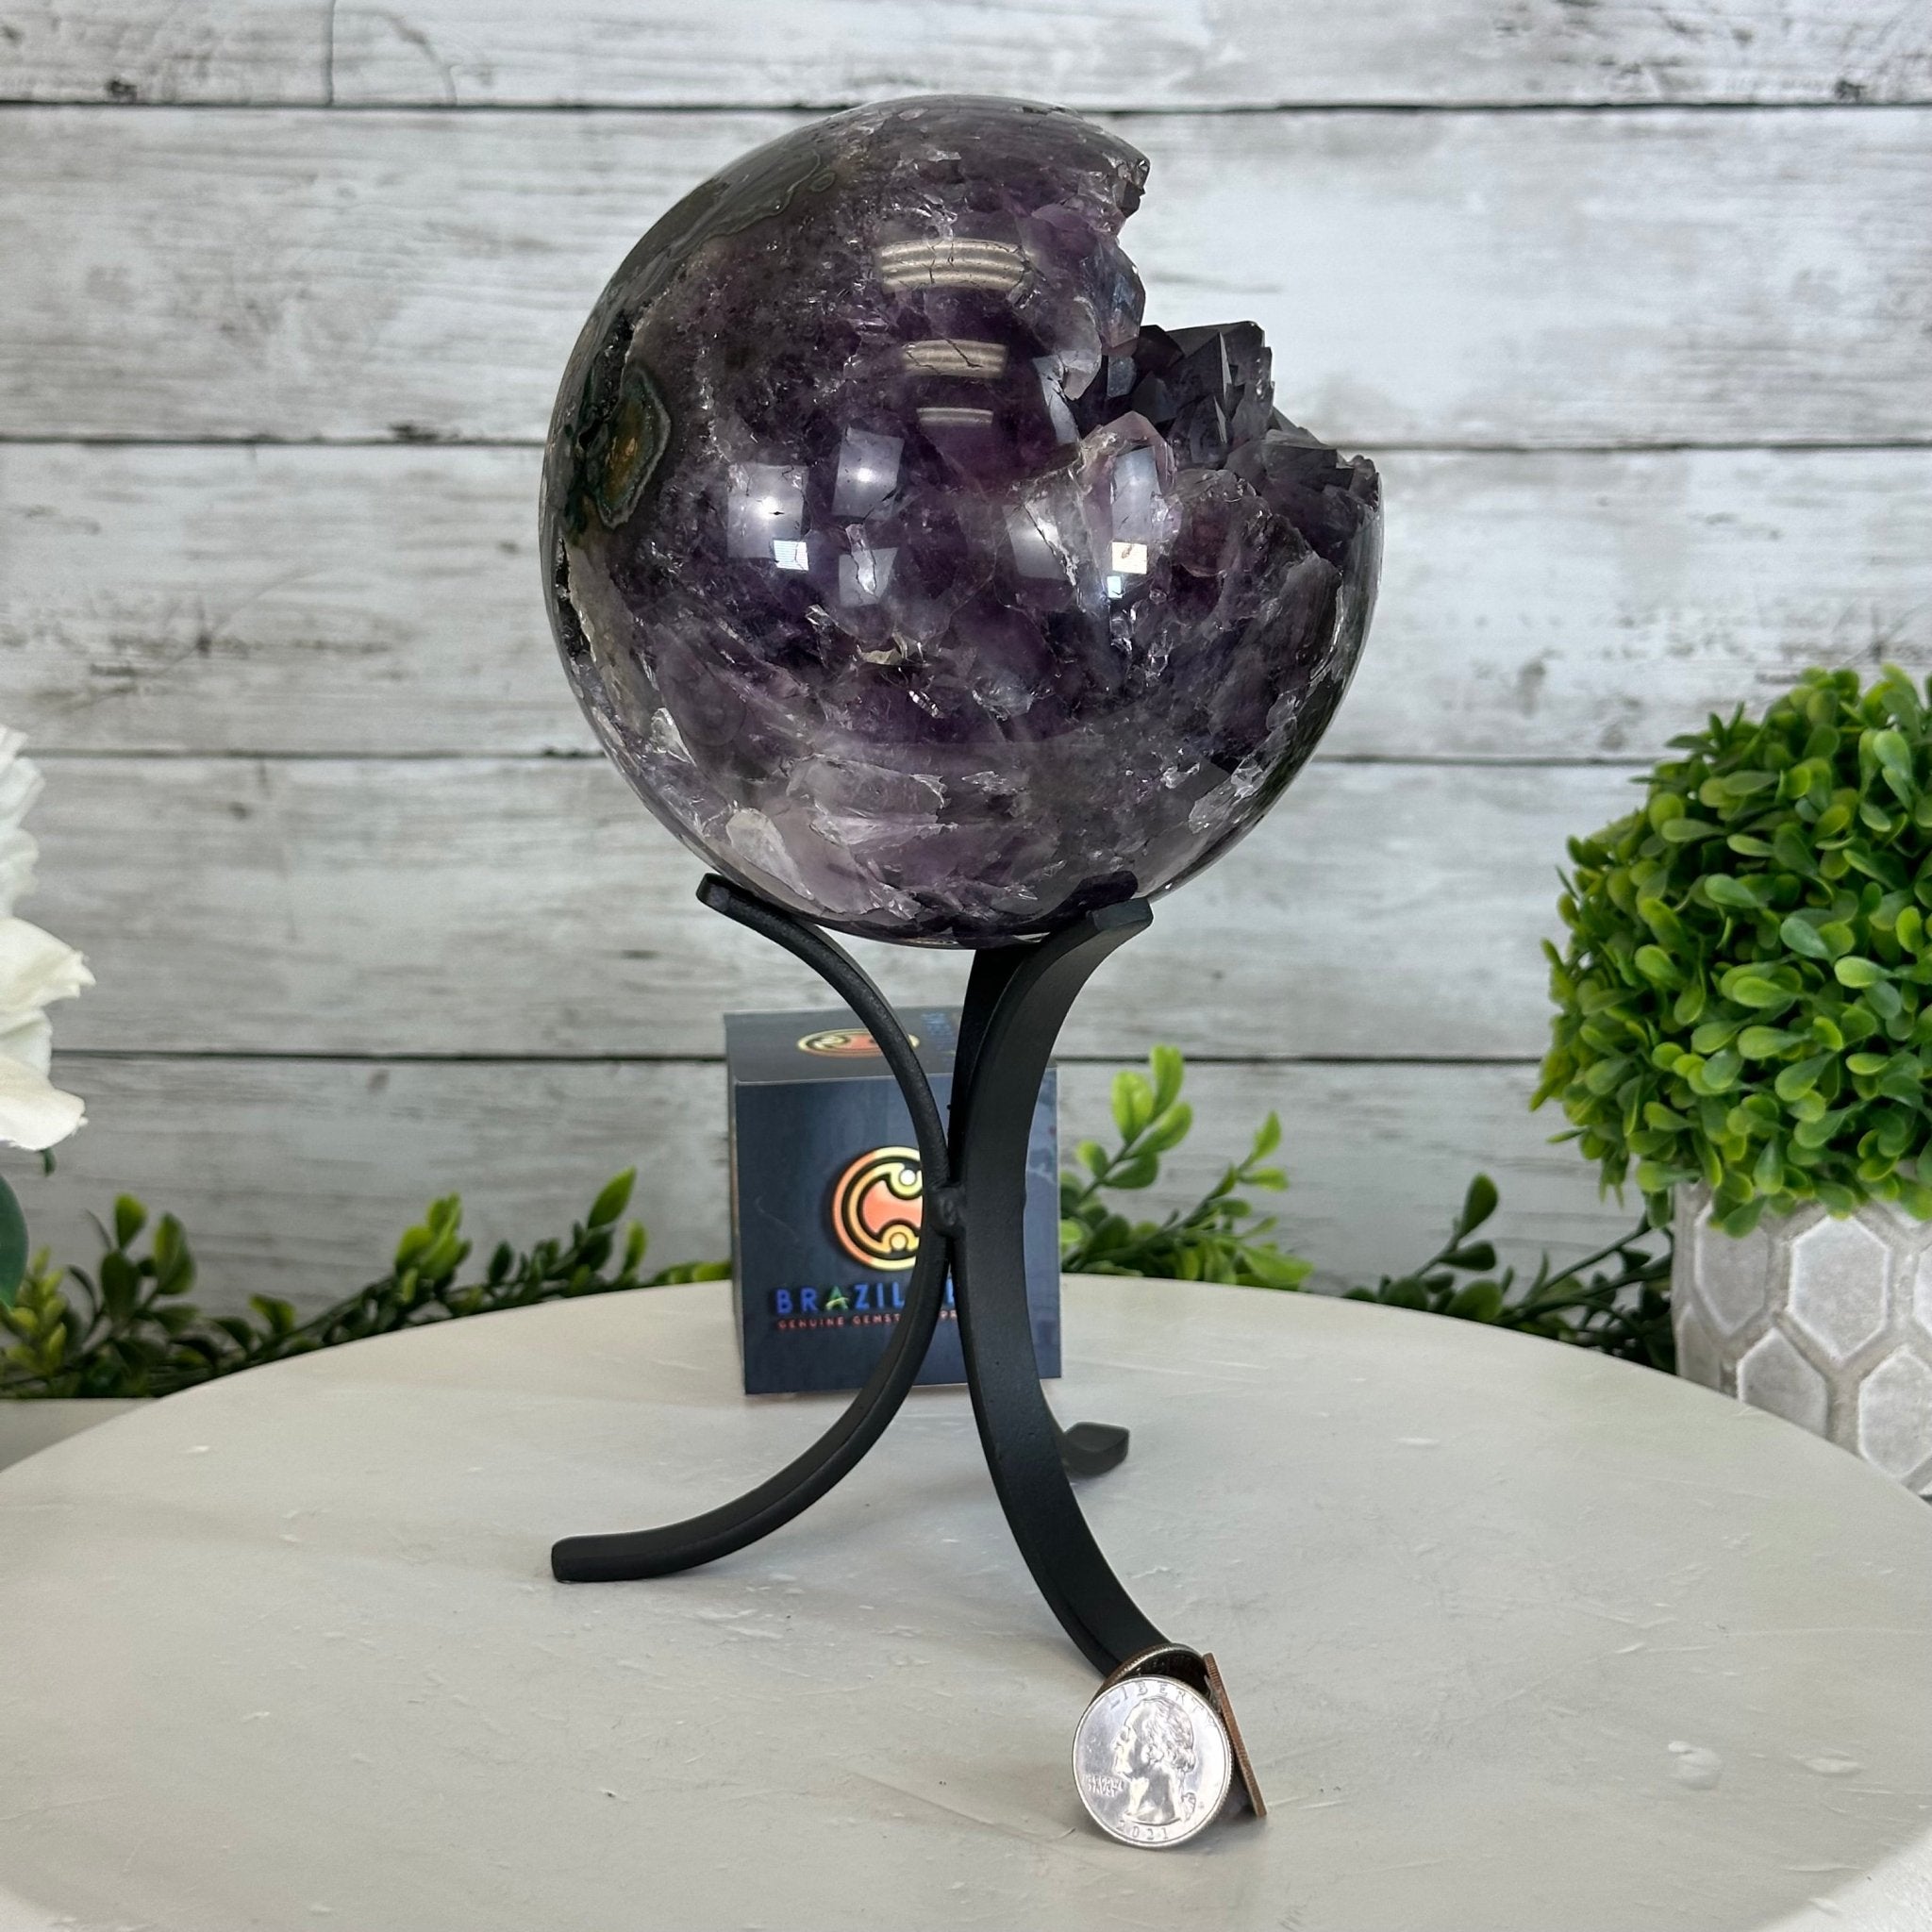 Extra Plus Druzy Amethyst Sphere on a Metal Stand, 6.7 lbs & 9.9" Tall #5630-0067 - Brazil GemsBrazil GemsExtra Plus Druzy Amethyst Sphere on a Metal Stand, 6.7 lbs & 9.9" Tall #5630-0067Spheres5630-0067